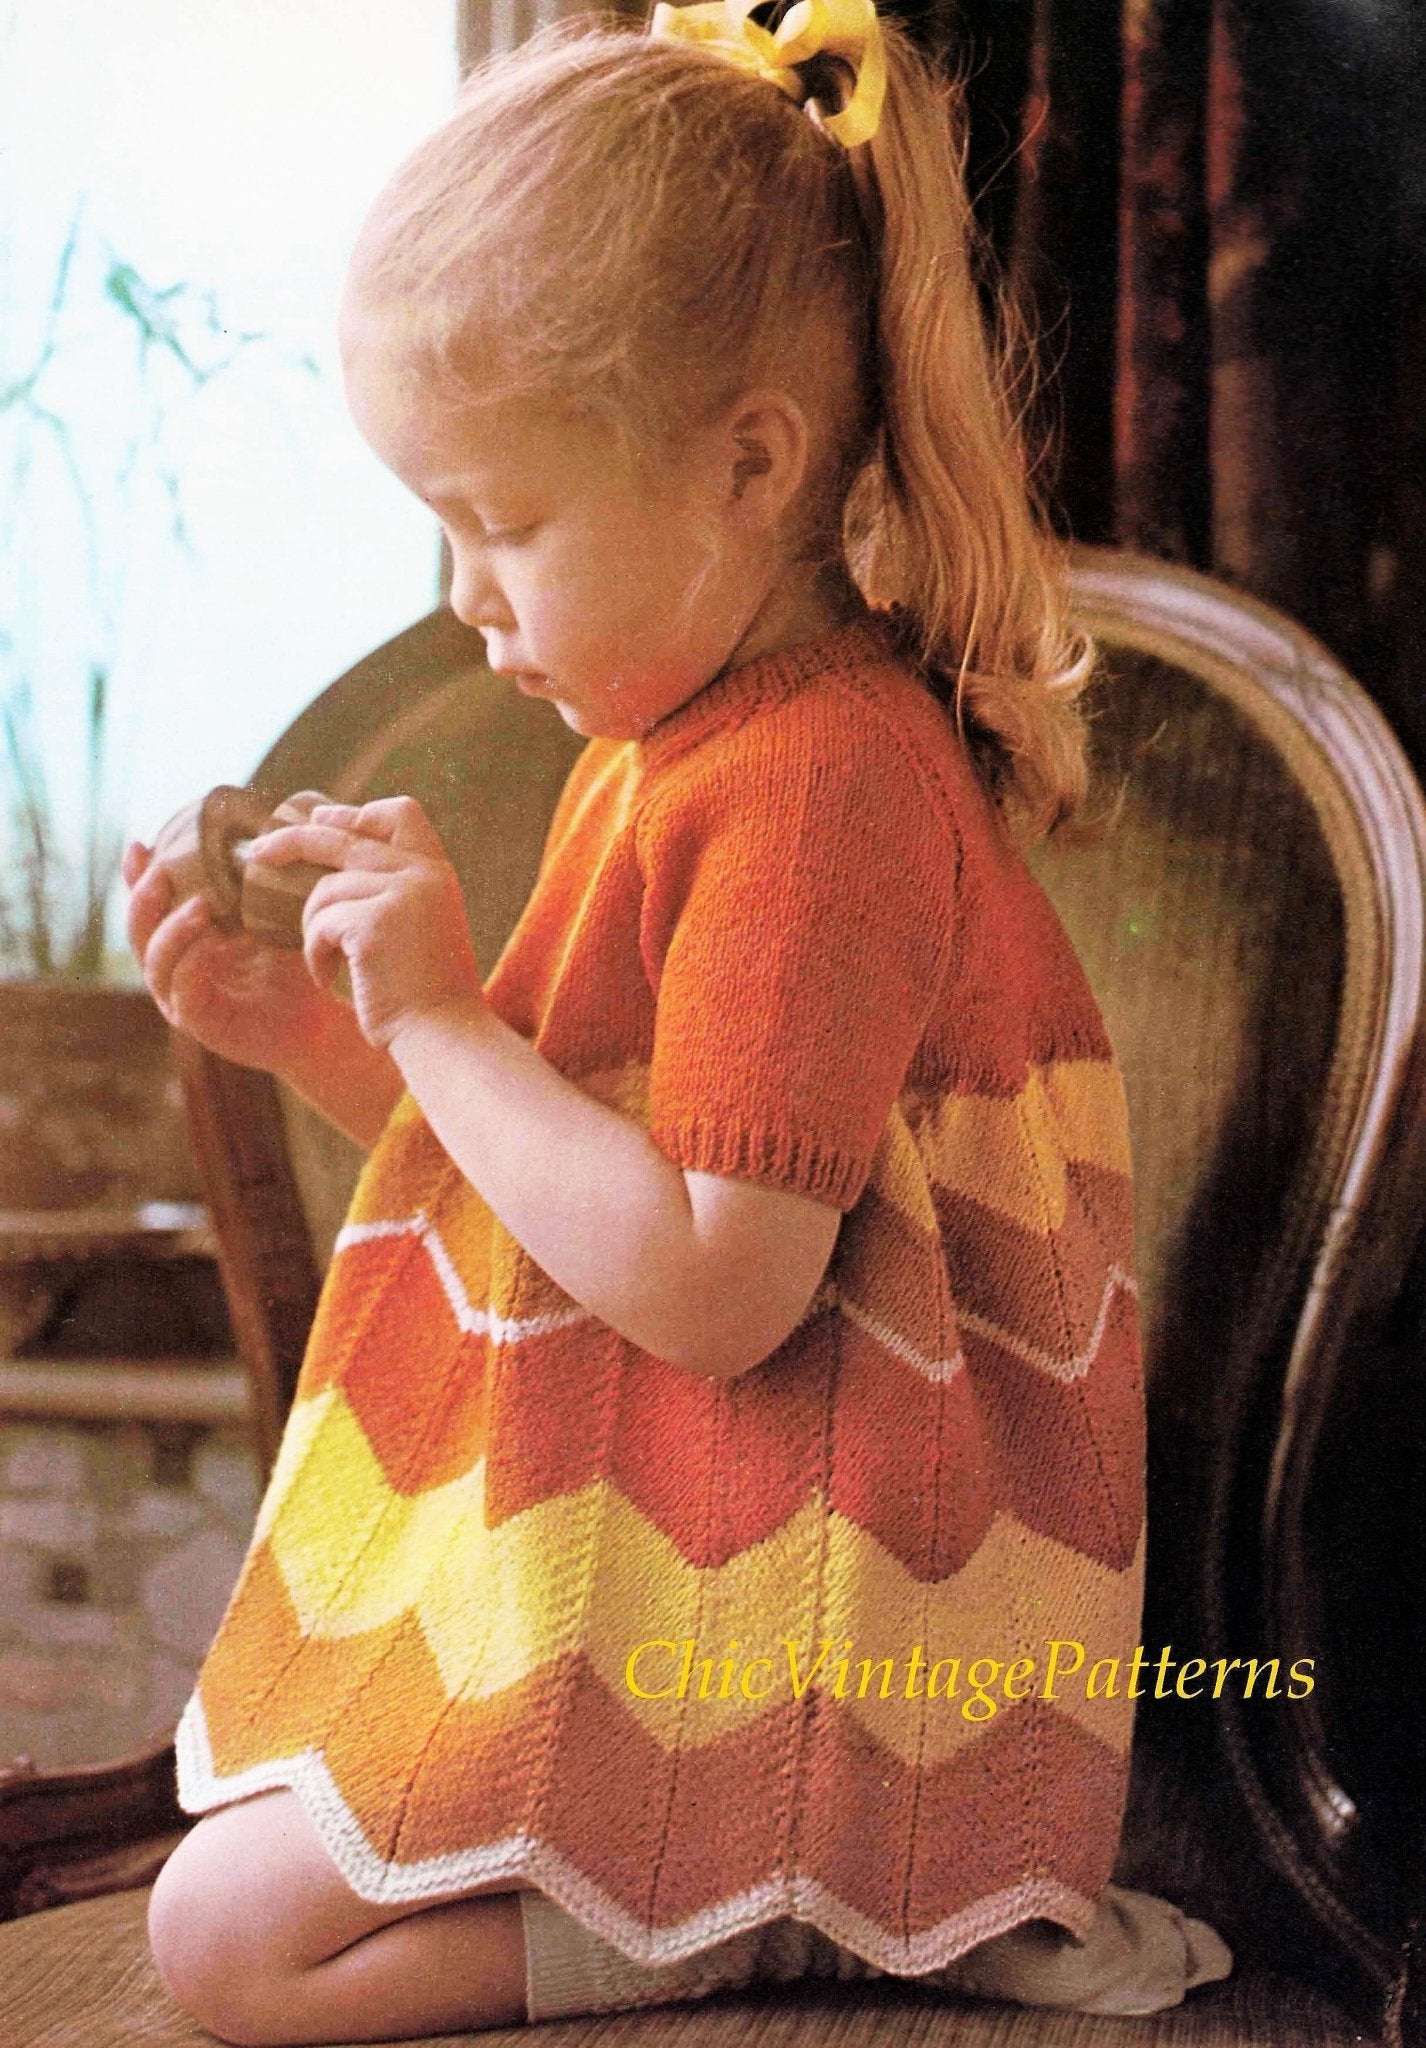 Child's Knitted Dress Pattern, Chevron Striped Dress, Digital Download